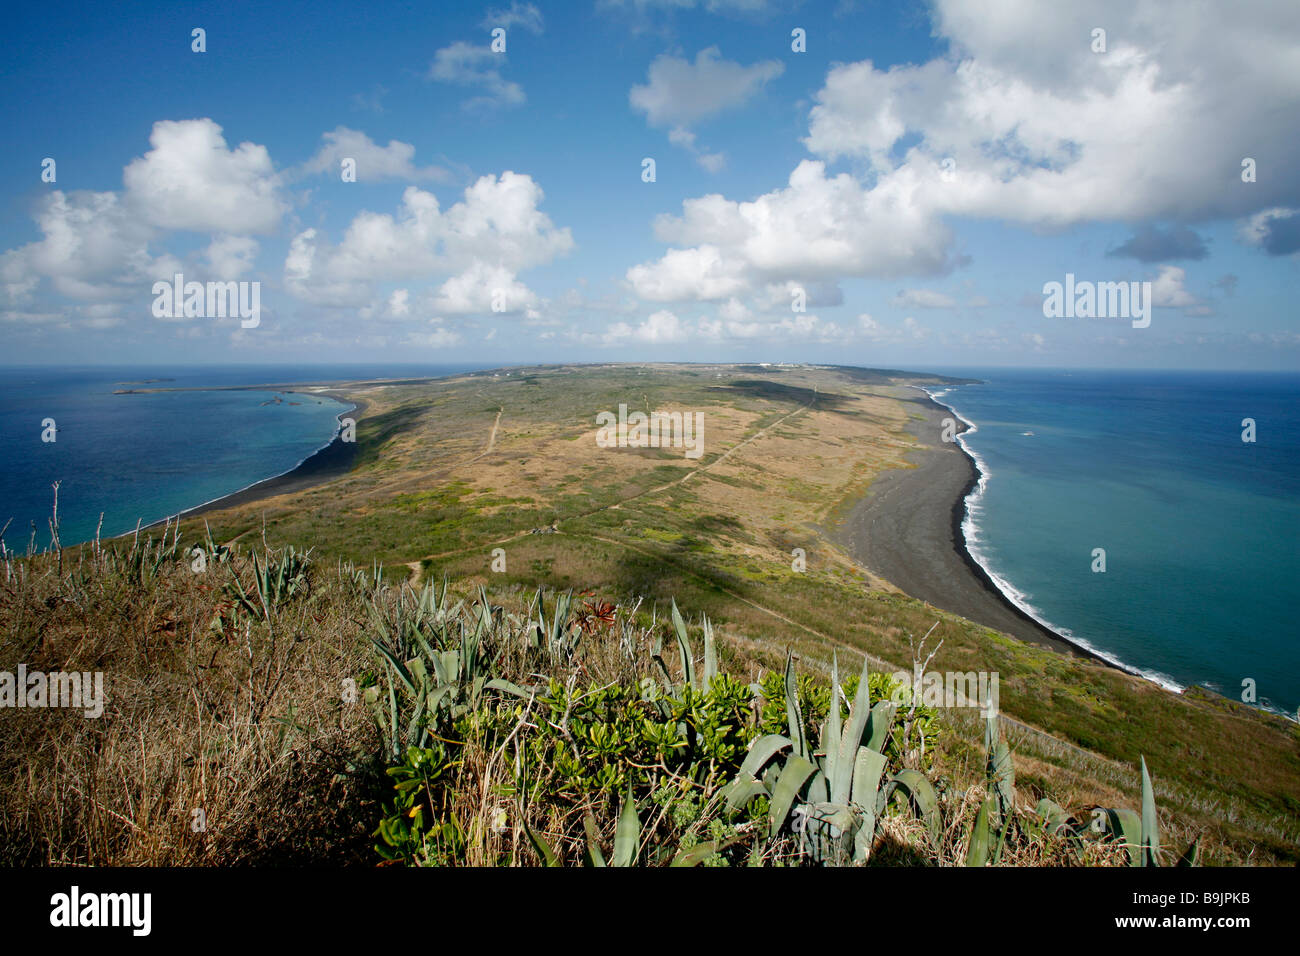 view-of-iwo-jima-island-from-the-summit-